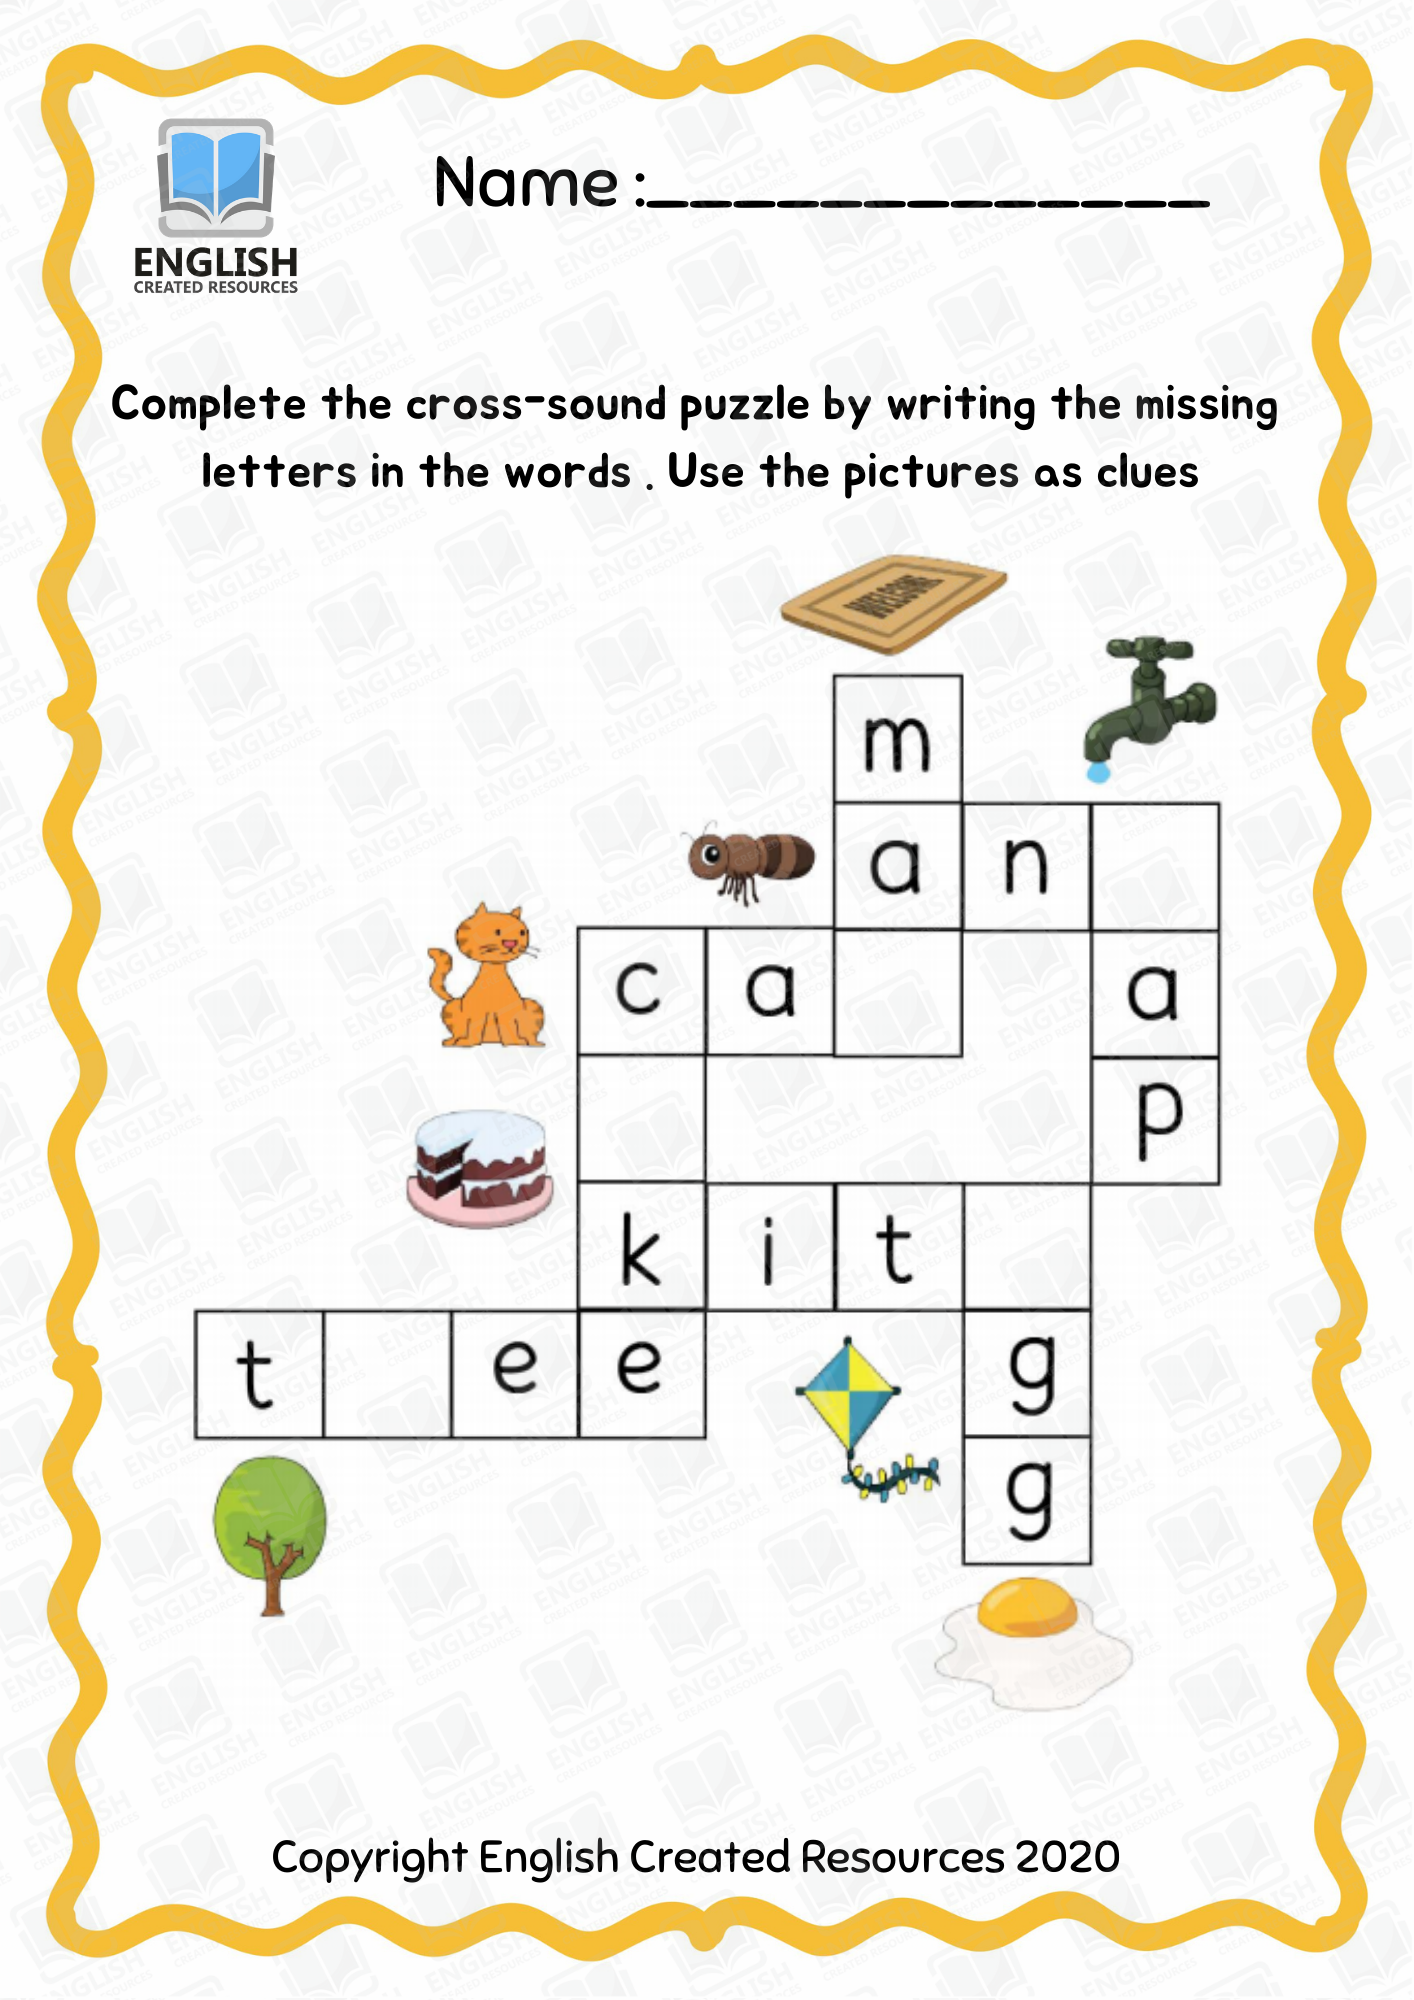 Kindergarten Crossword Puzzle - English Created Resources